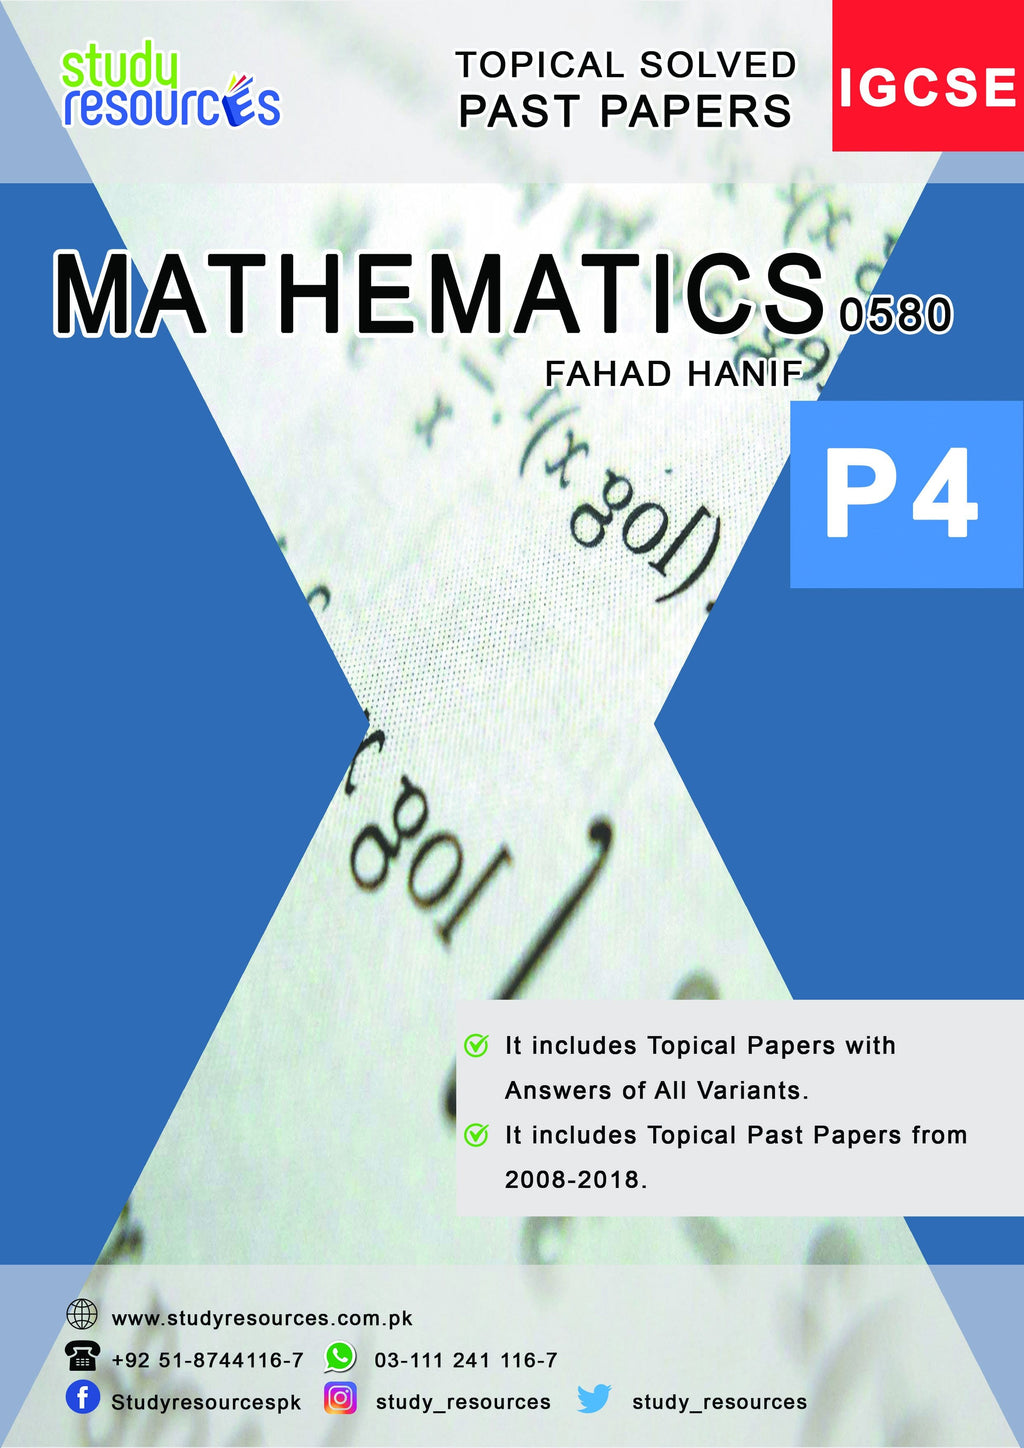 Cambridge IGCSE Mathematics (0580) P-4 Topical Past Papers (2008-2018) by Fahad Hanif